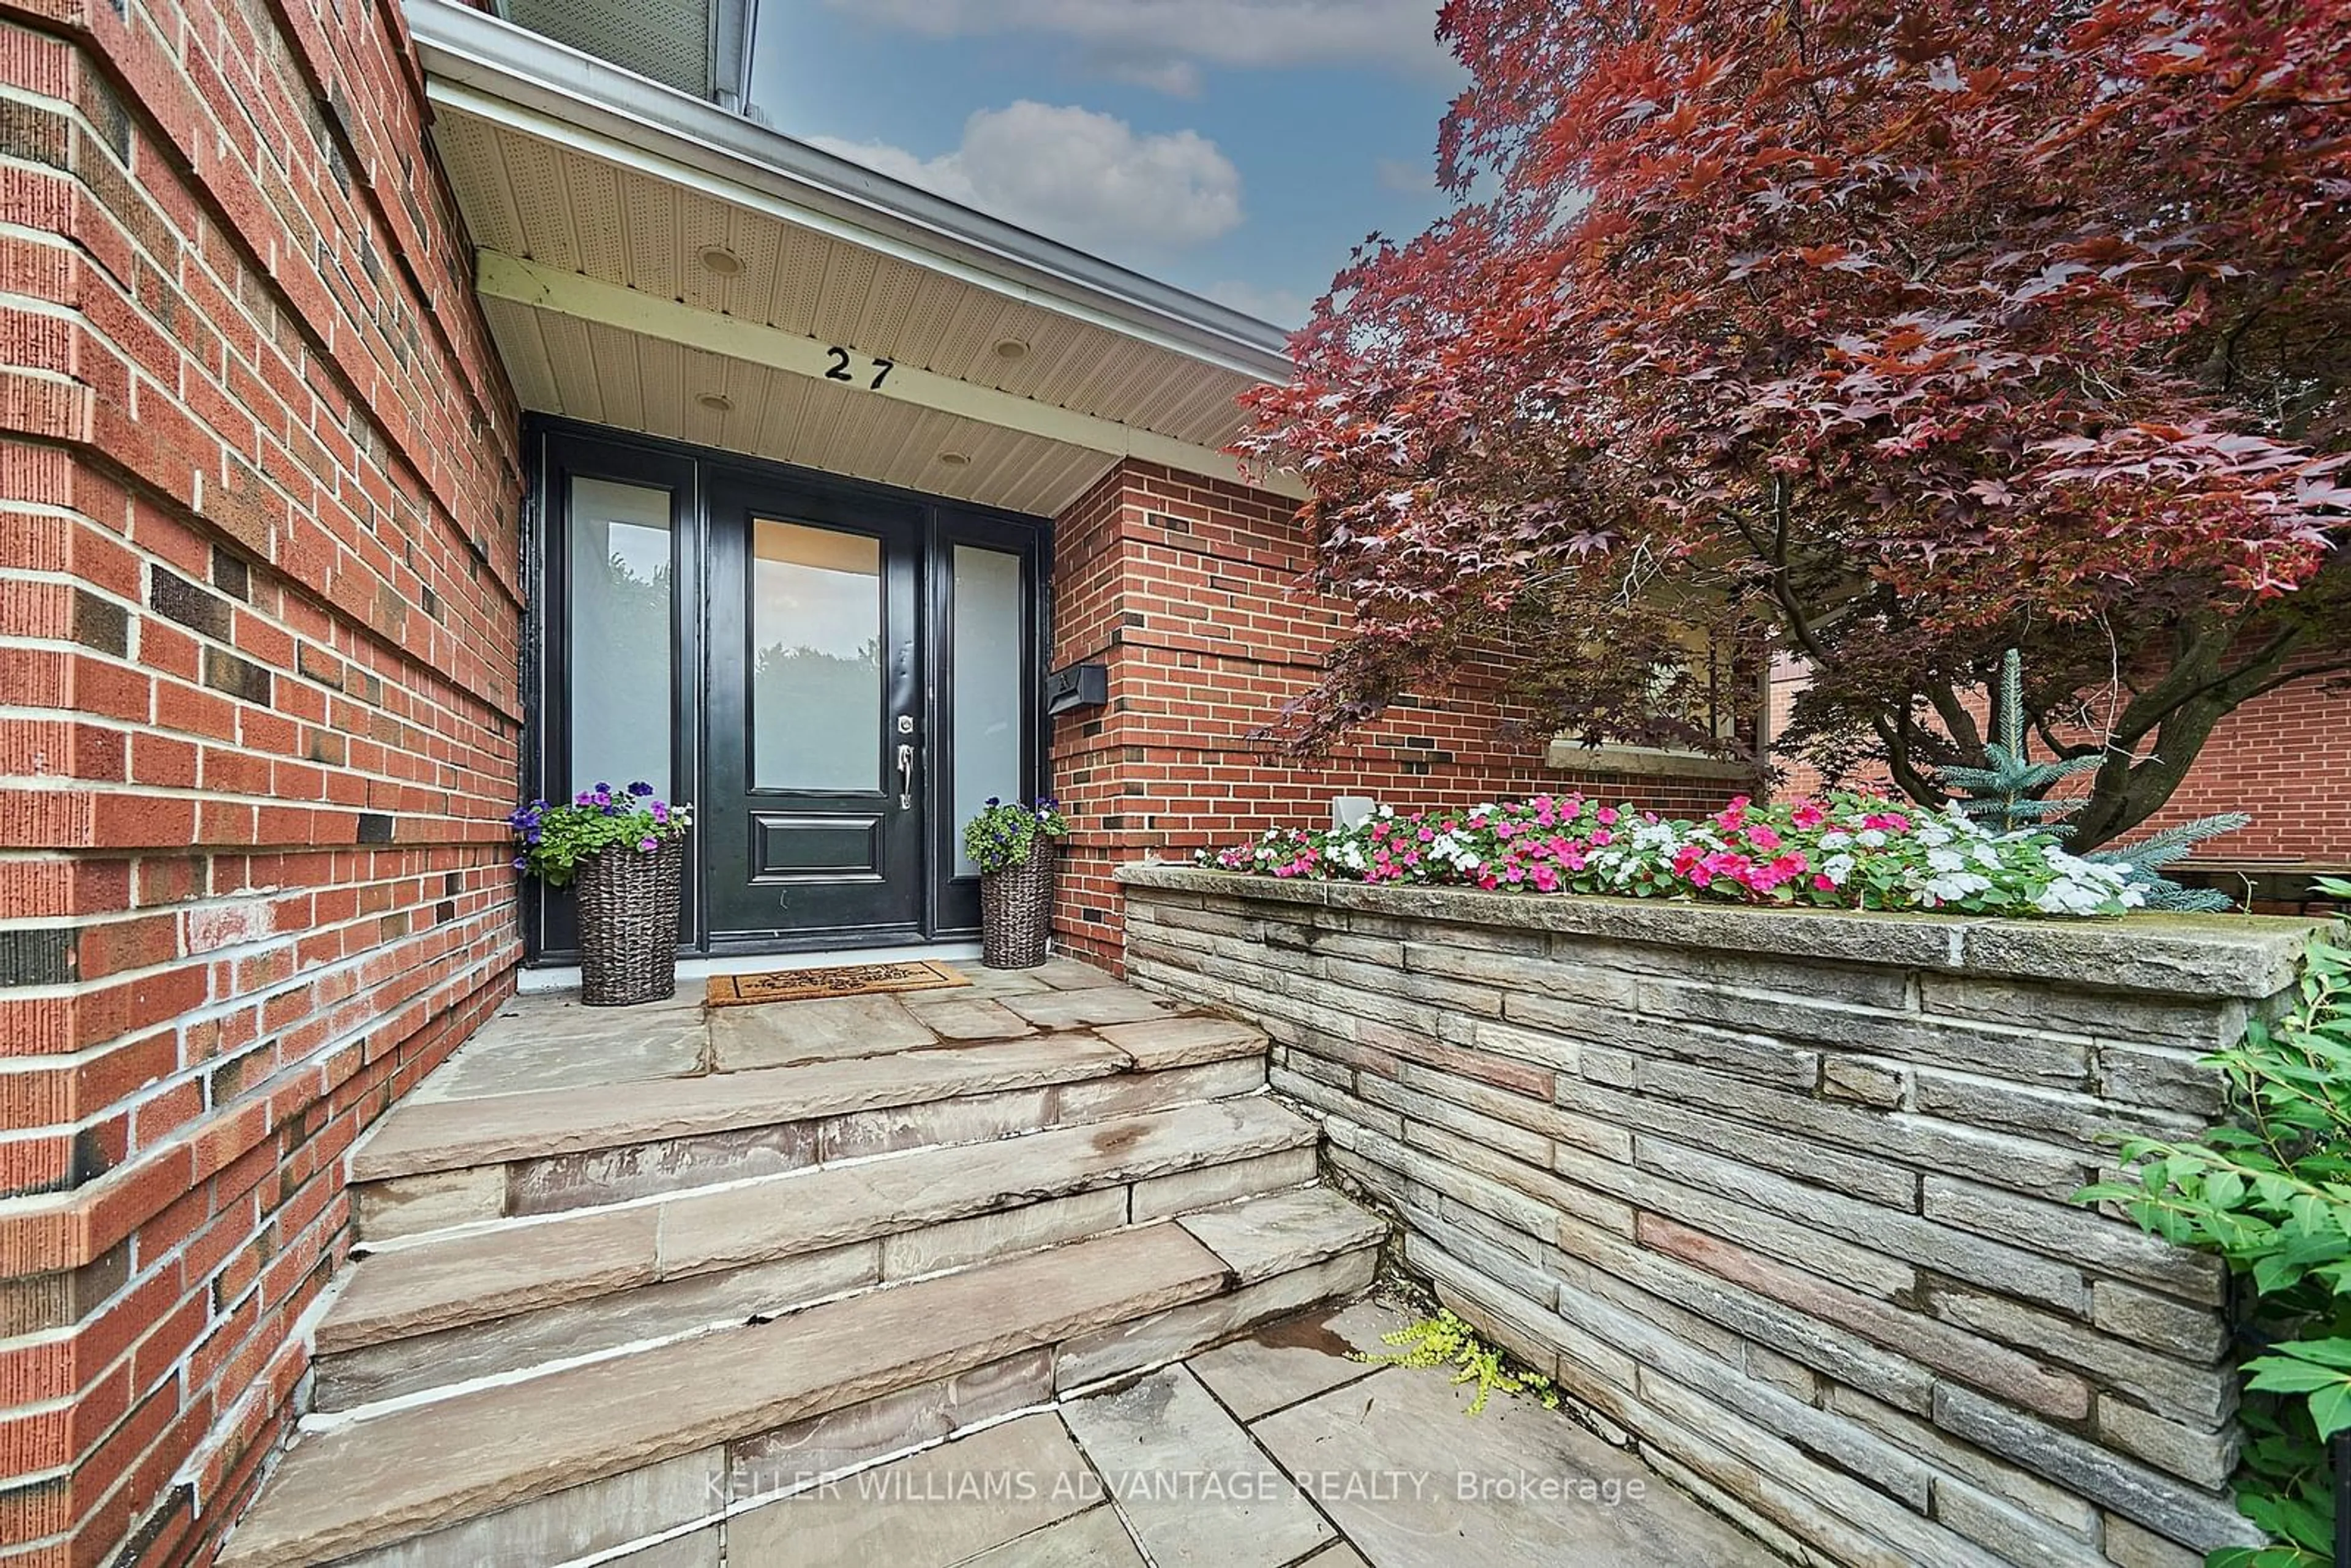 Home with brick exterior material for 27 Mcnab Blvd, Toronto Ontario M1M 2W4